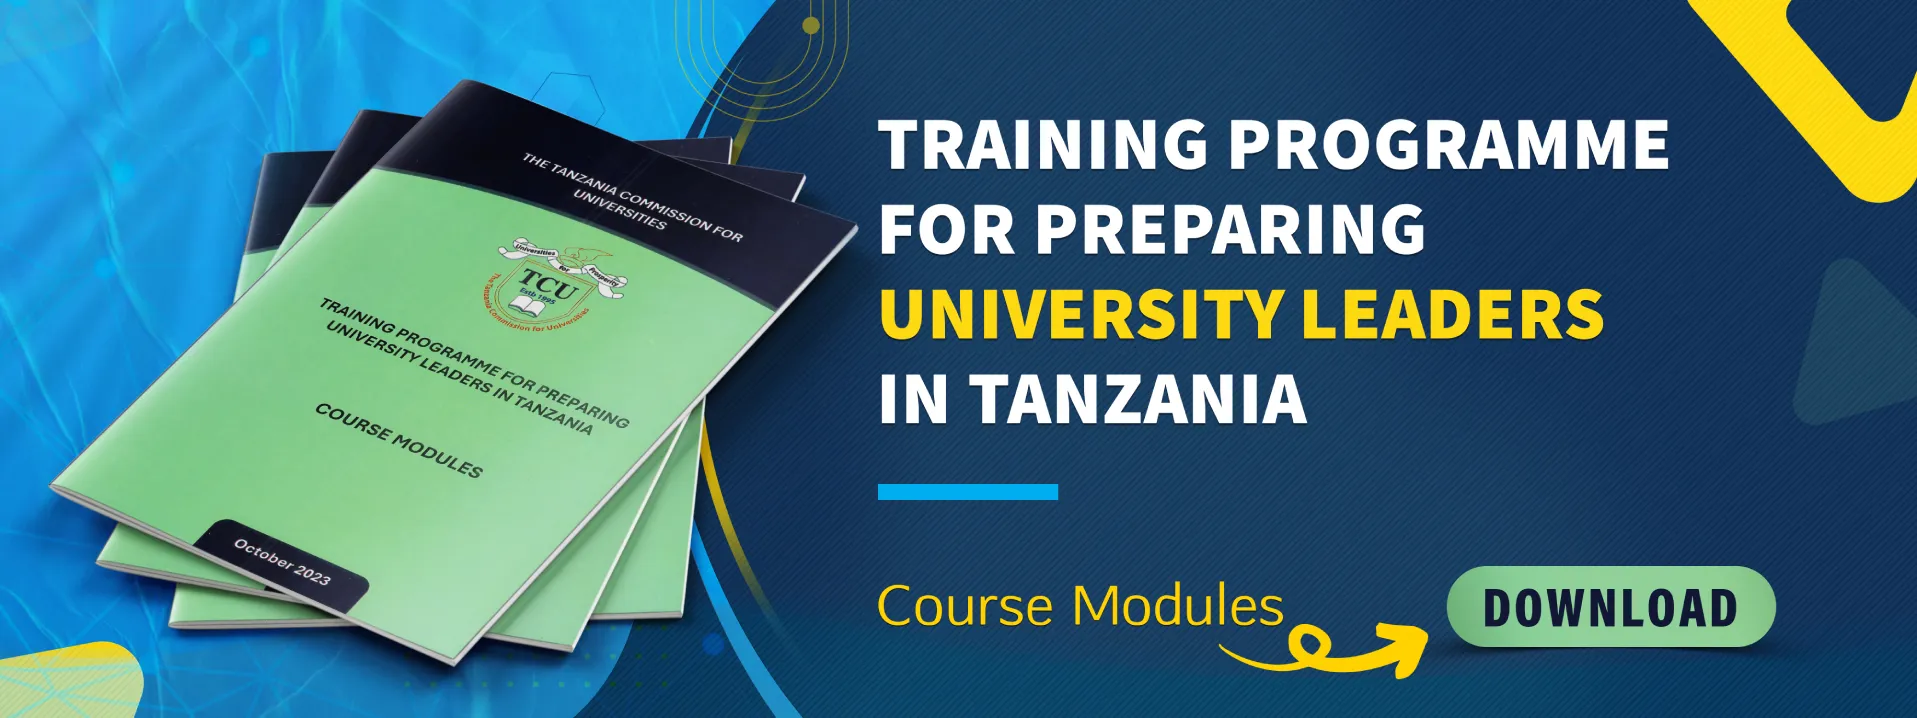 Training Programme for Preparing University Leaders in Tanzania